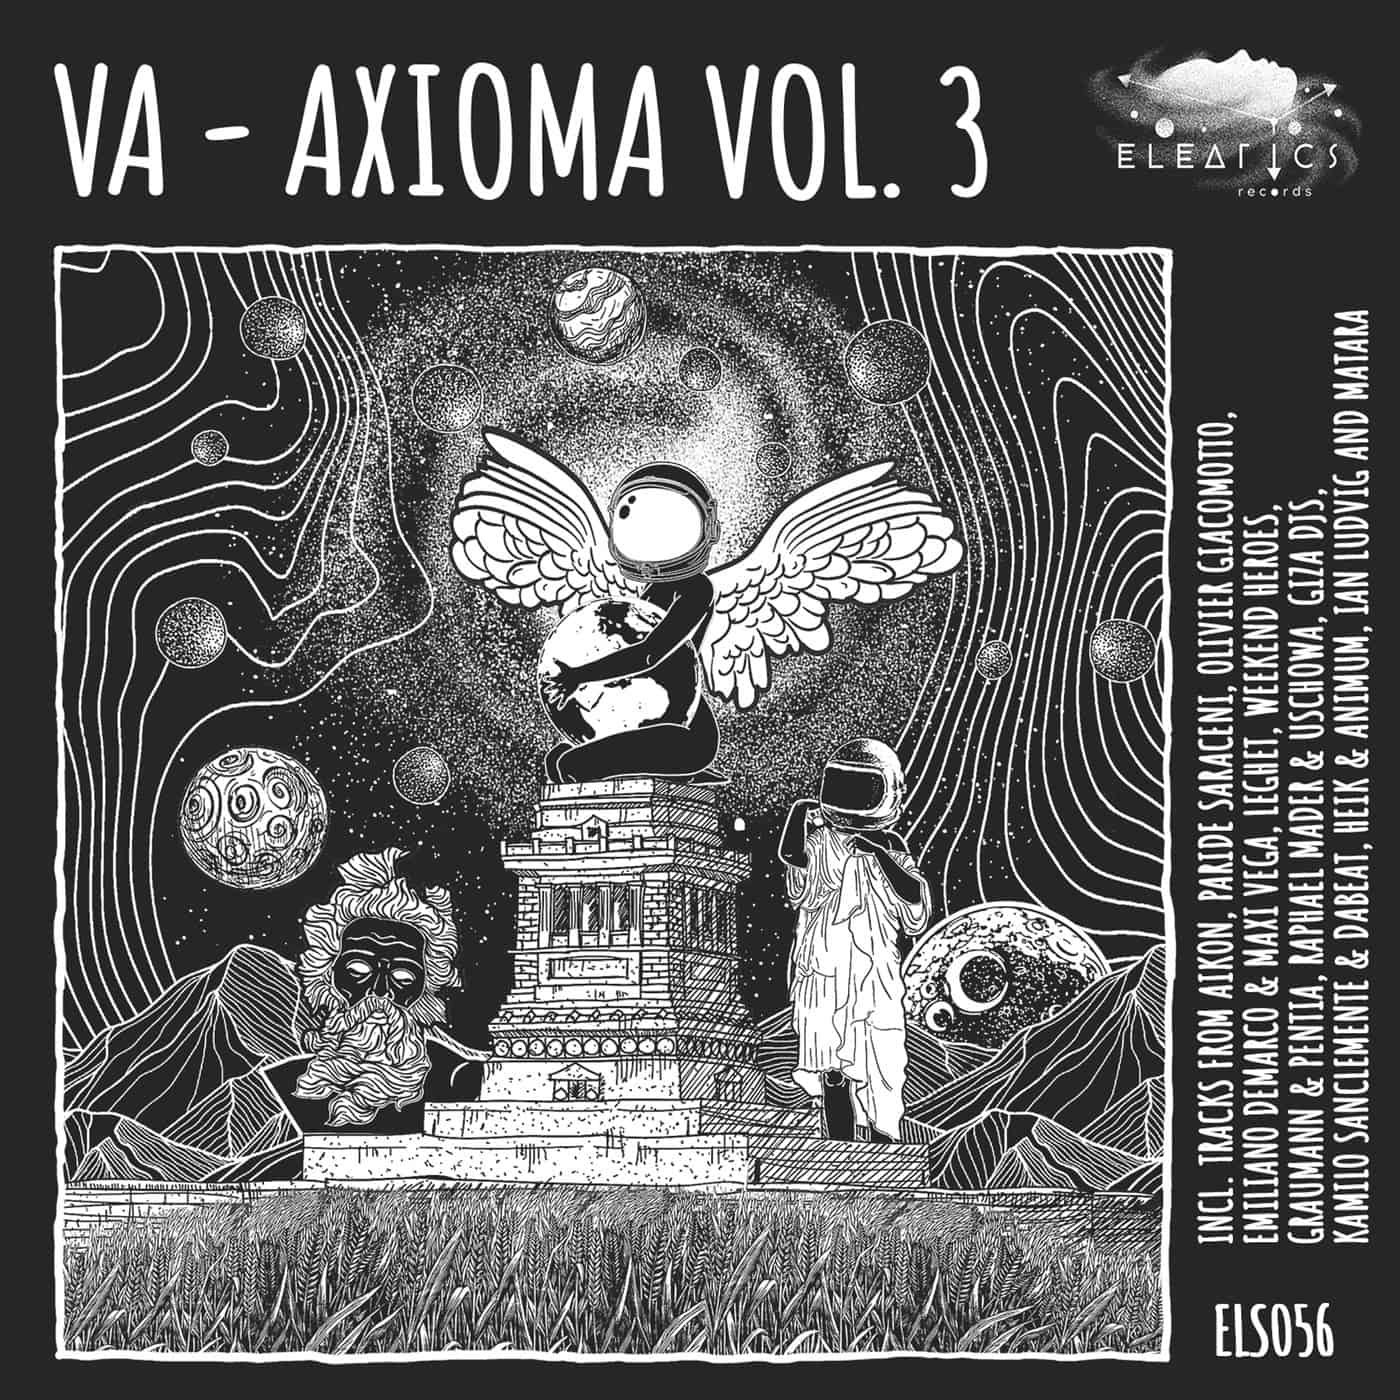 Download VA - Axioma vol. 3 on Electrobuzz